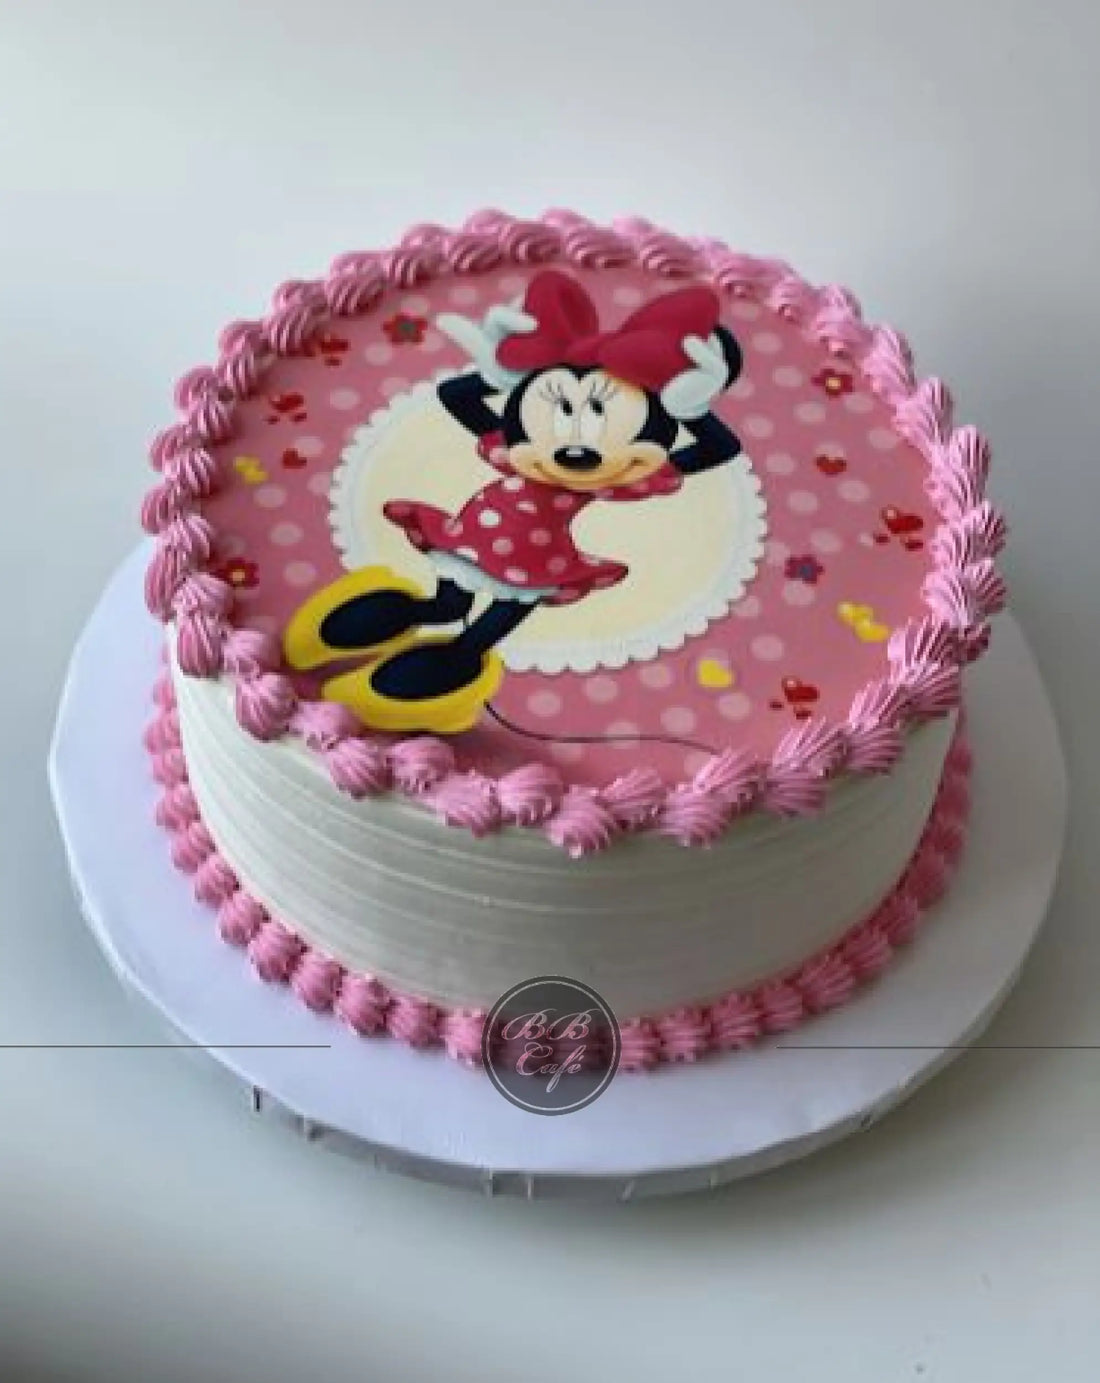 Edible print on whipped cream - custom cake